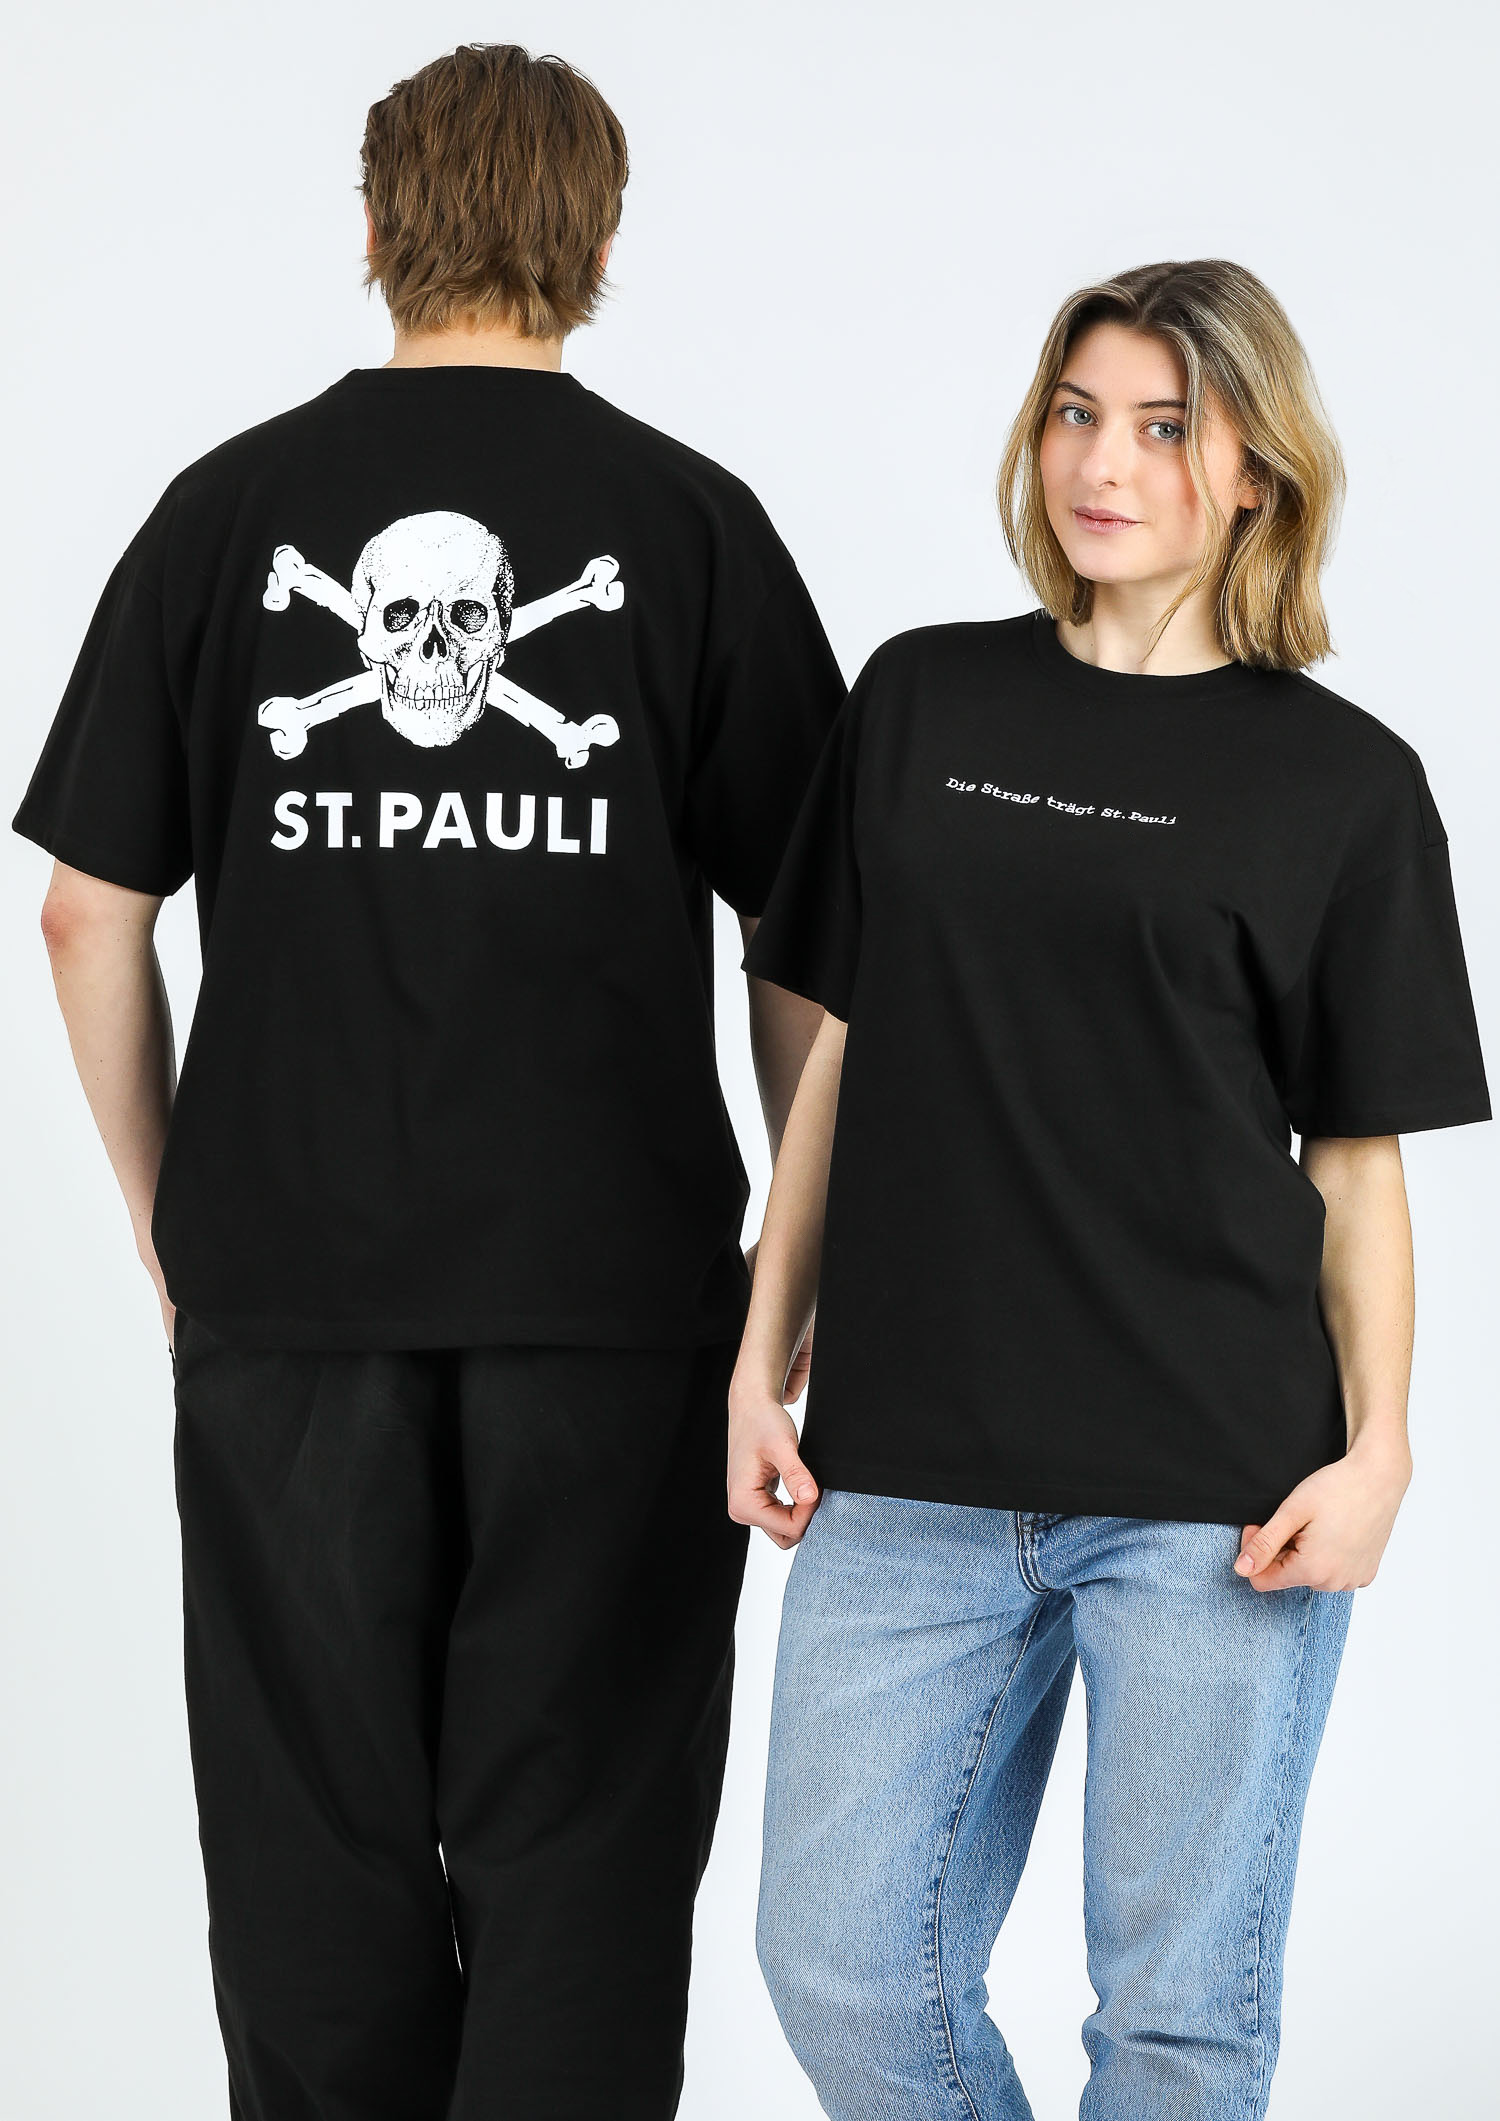 T-Shirt "Die Strasse trägt" - black